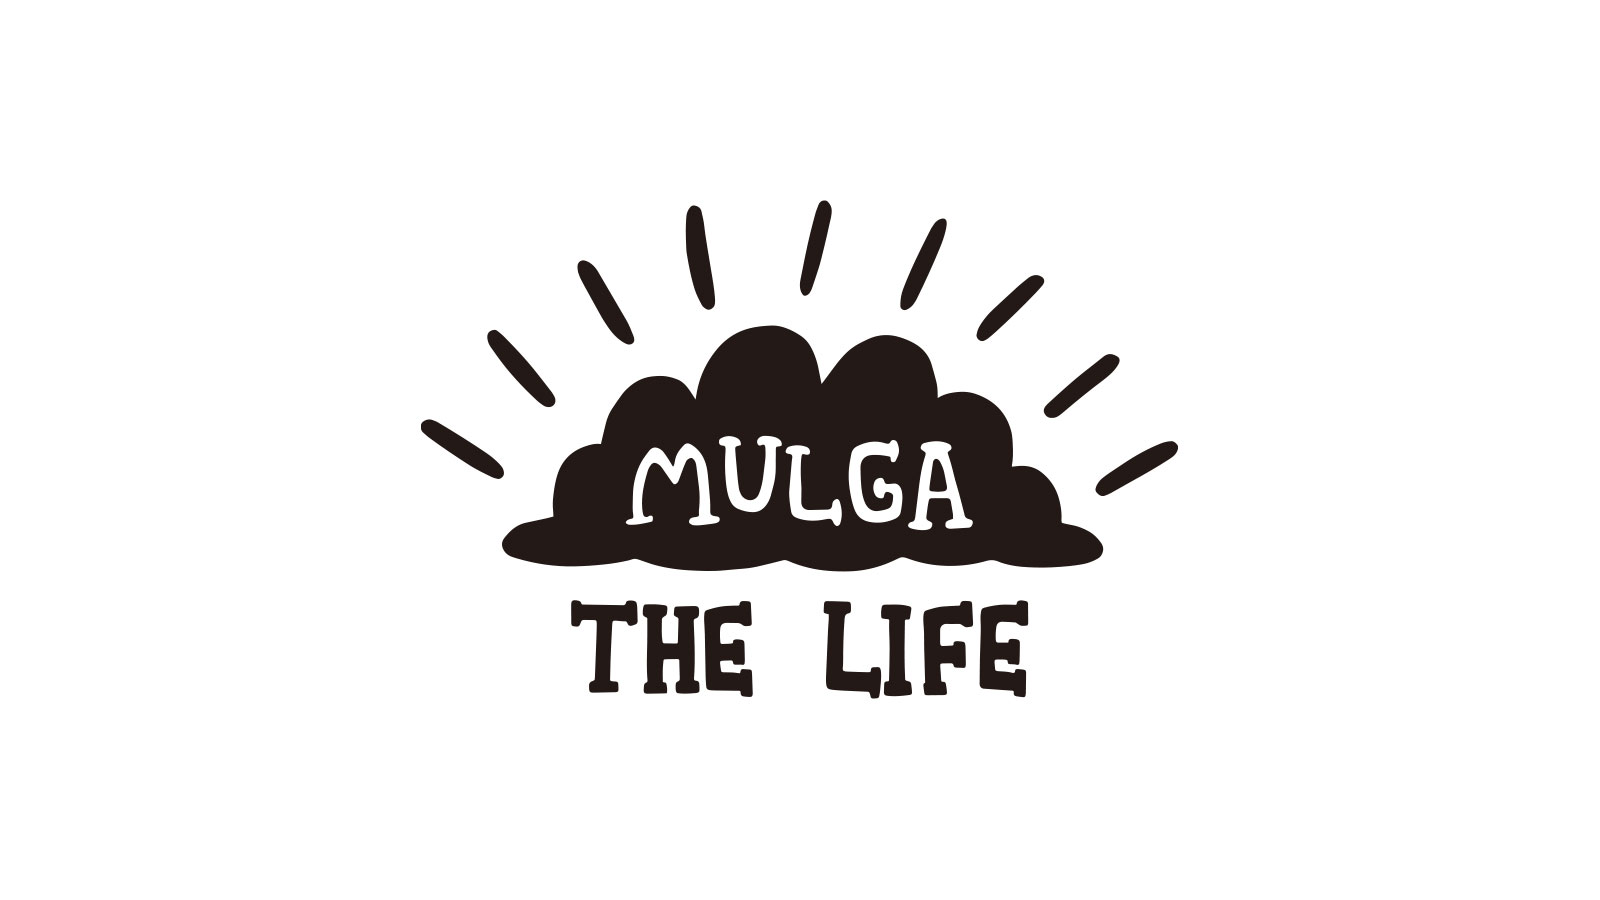 MULGA THE LIFE